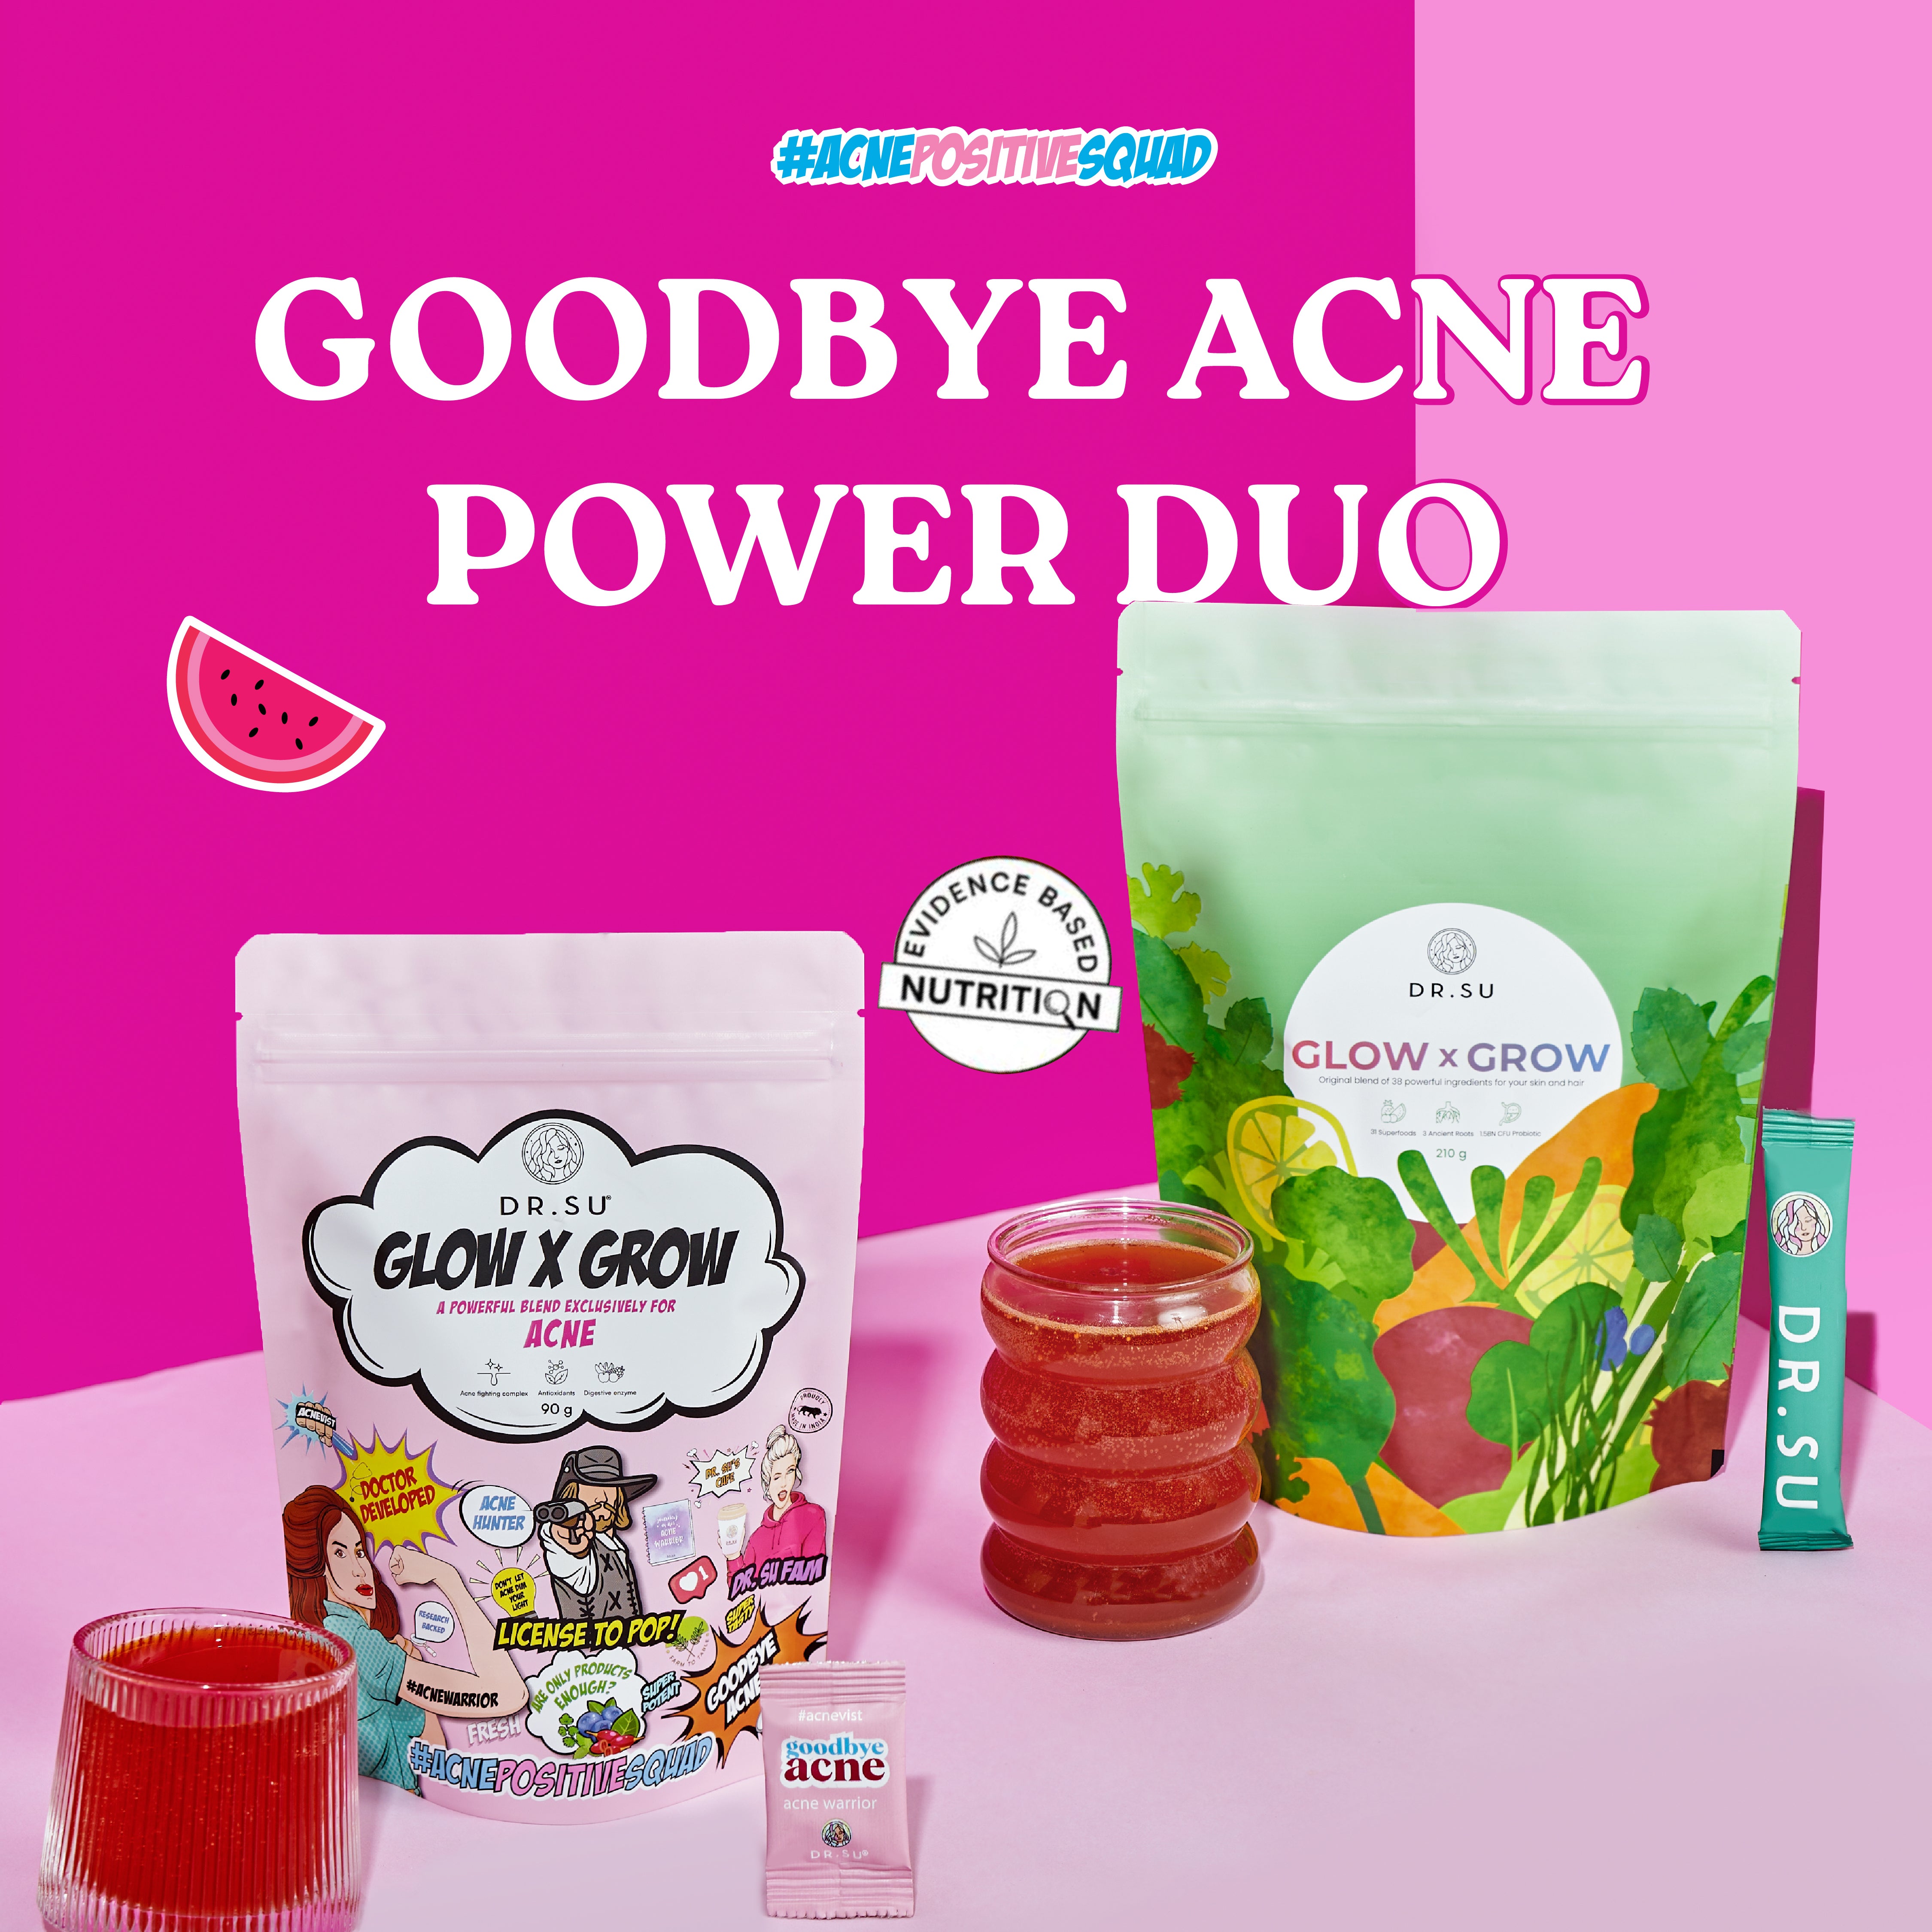 Goodbye Acne Power Duo